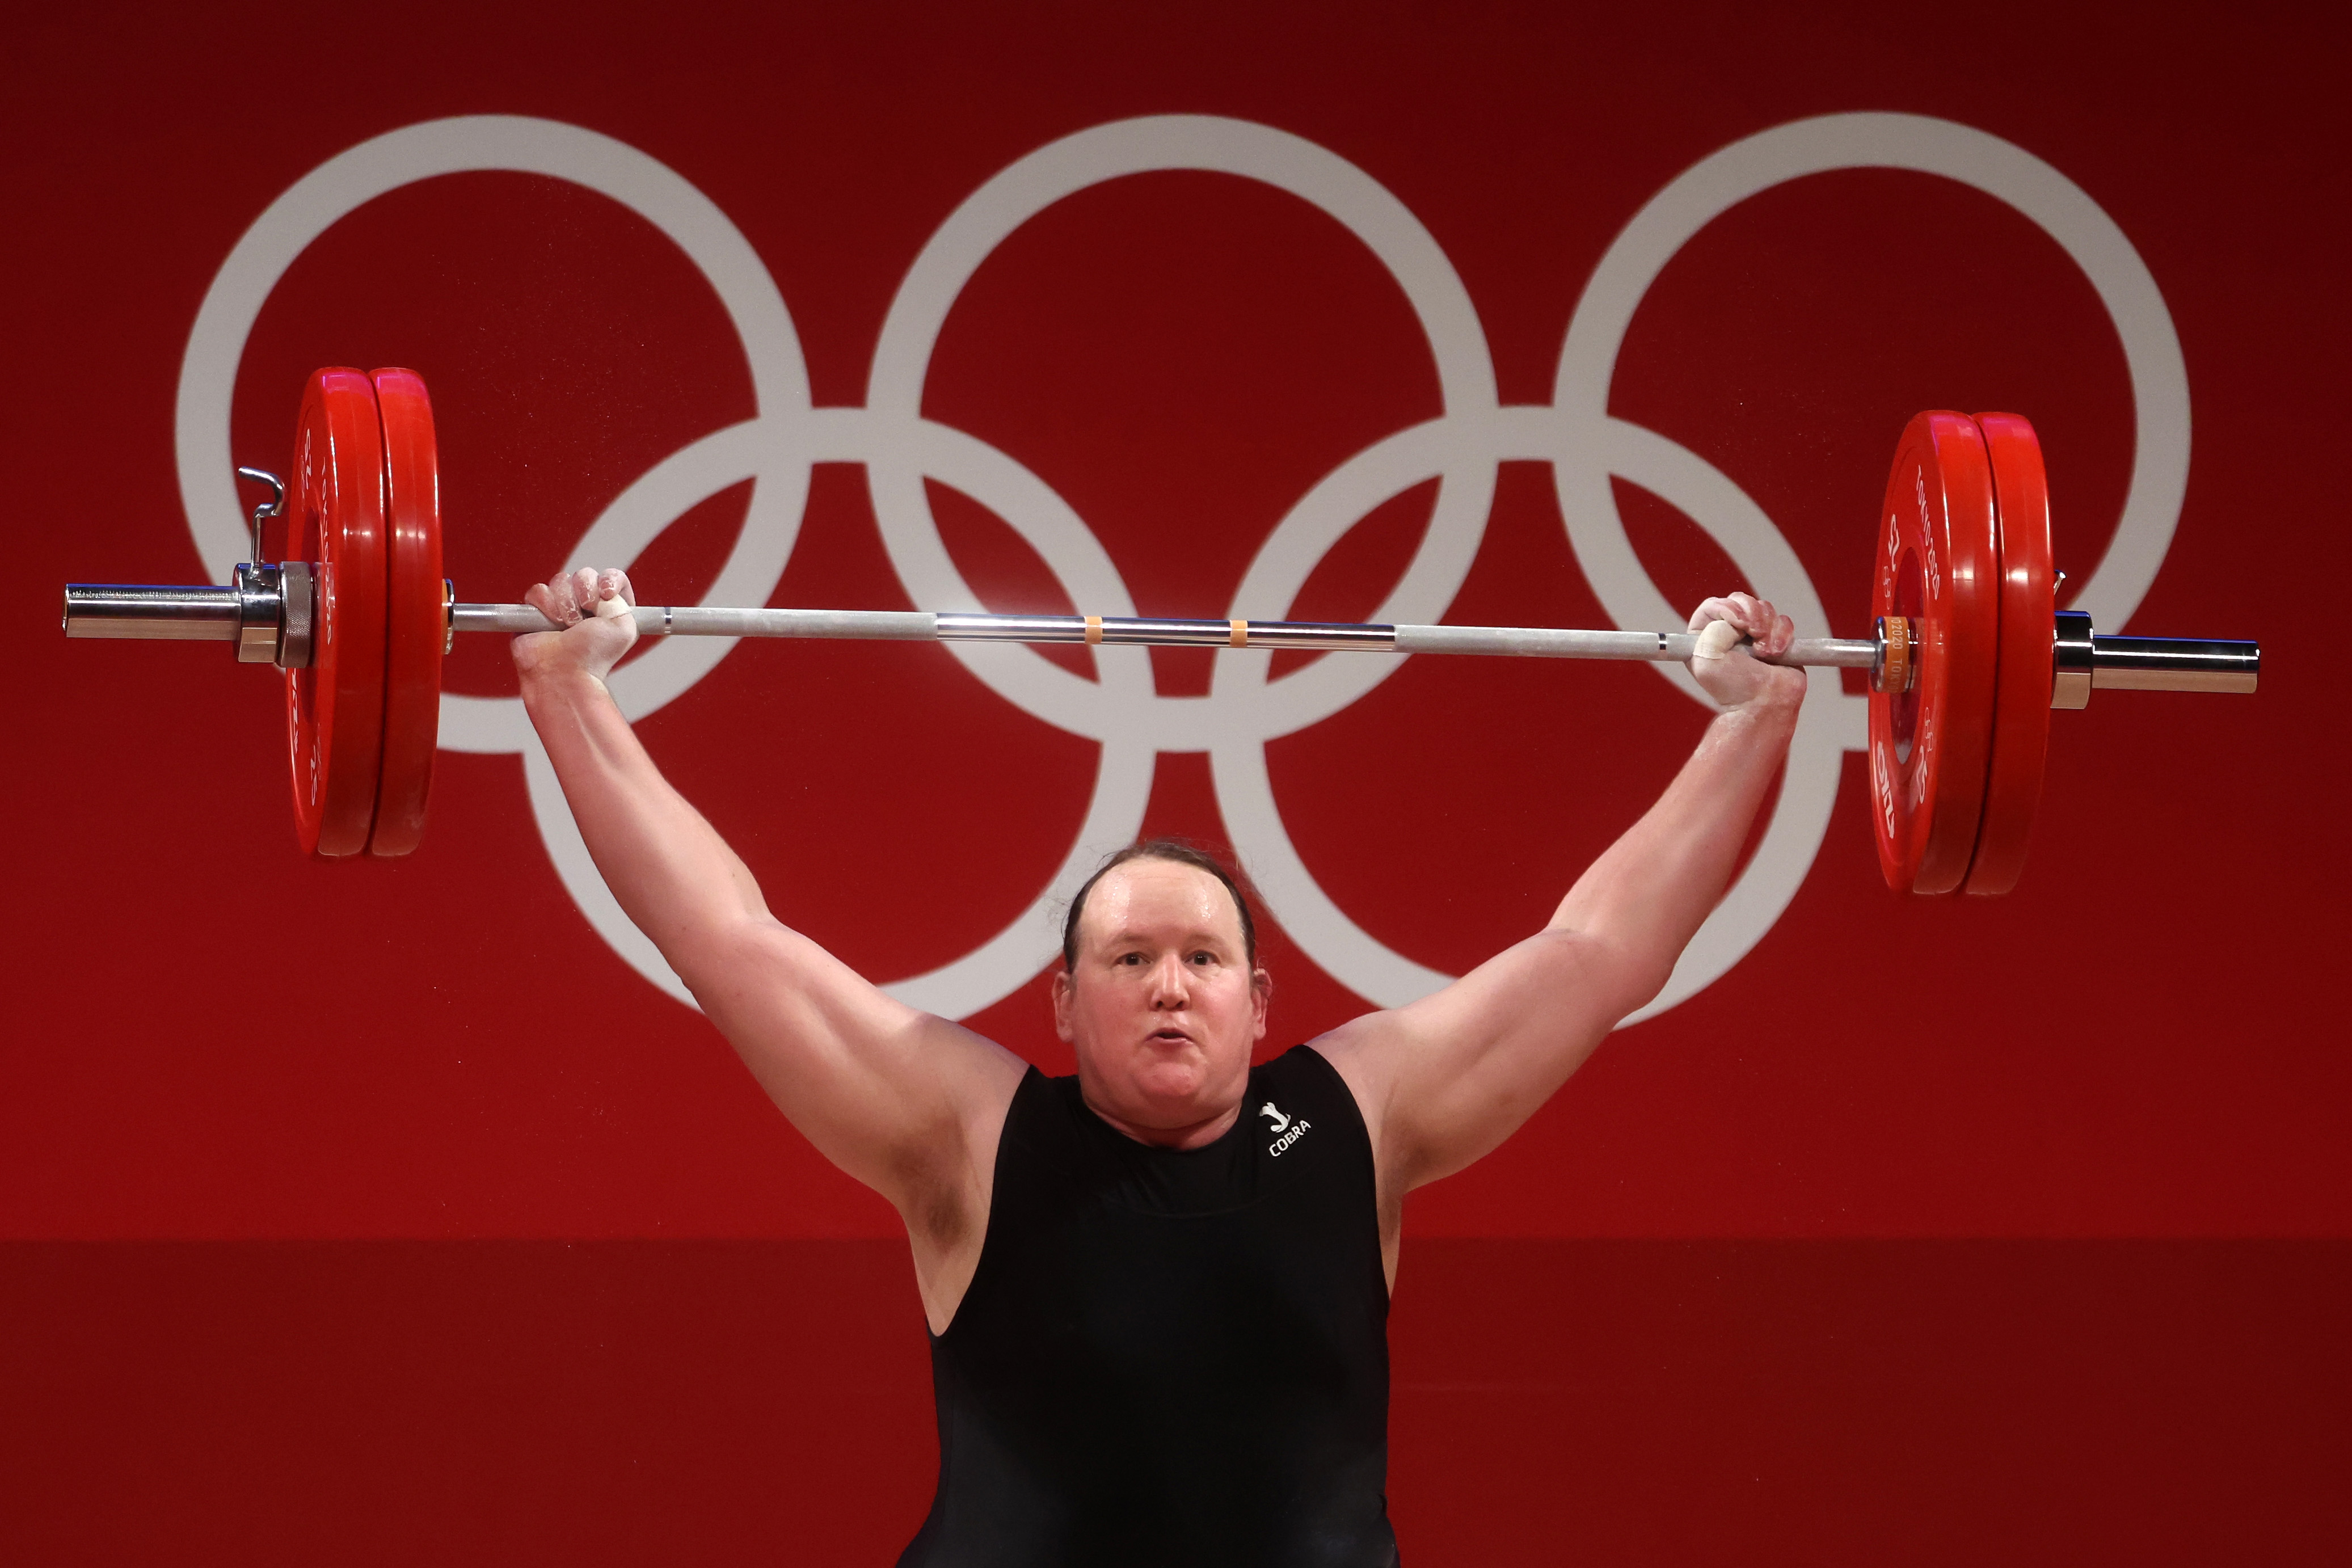 El atletismo mundial no prohíbe a los atletas trans pero les dificulta competir